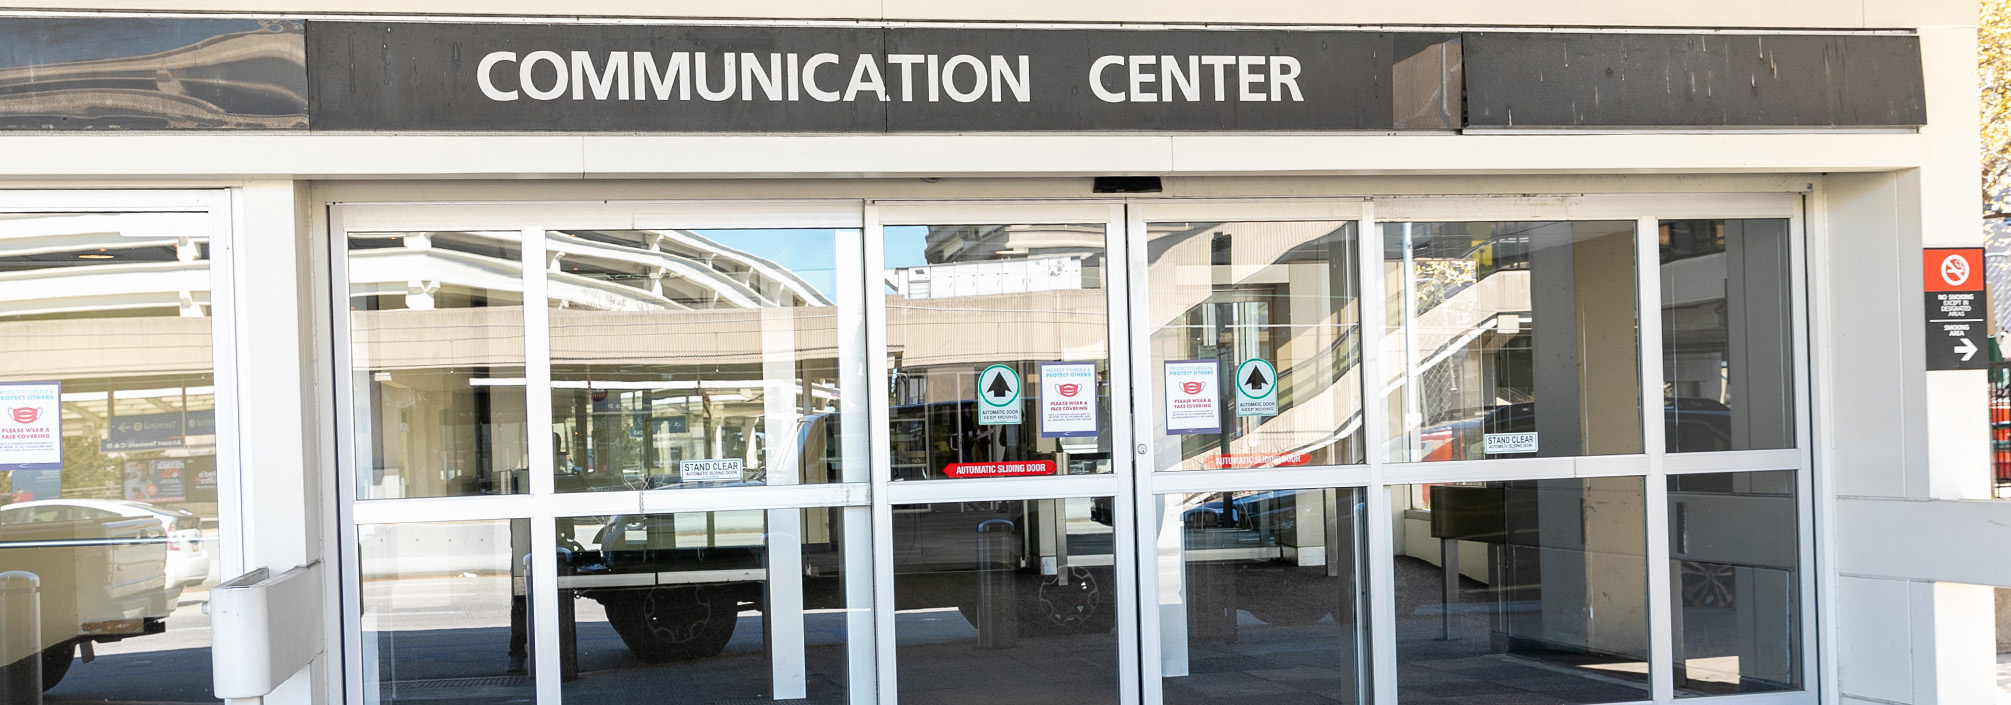 communications center sign